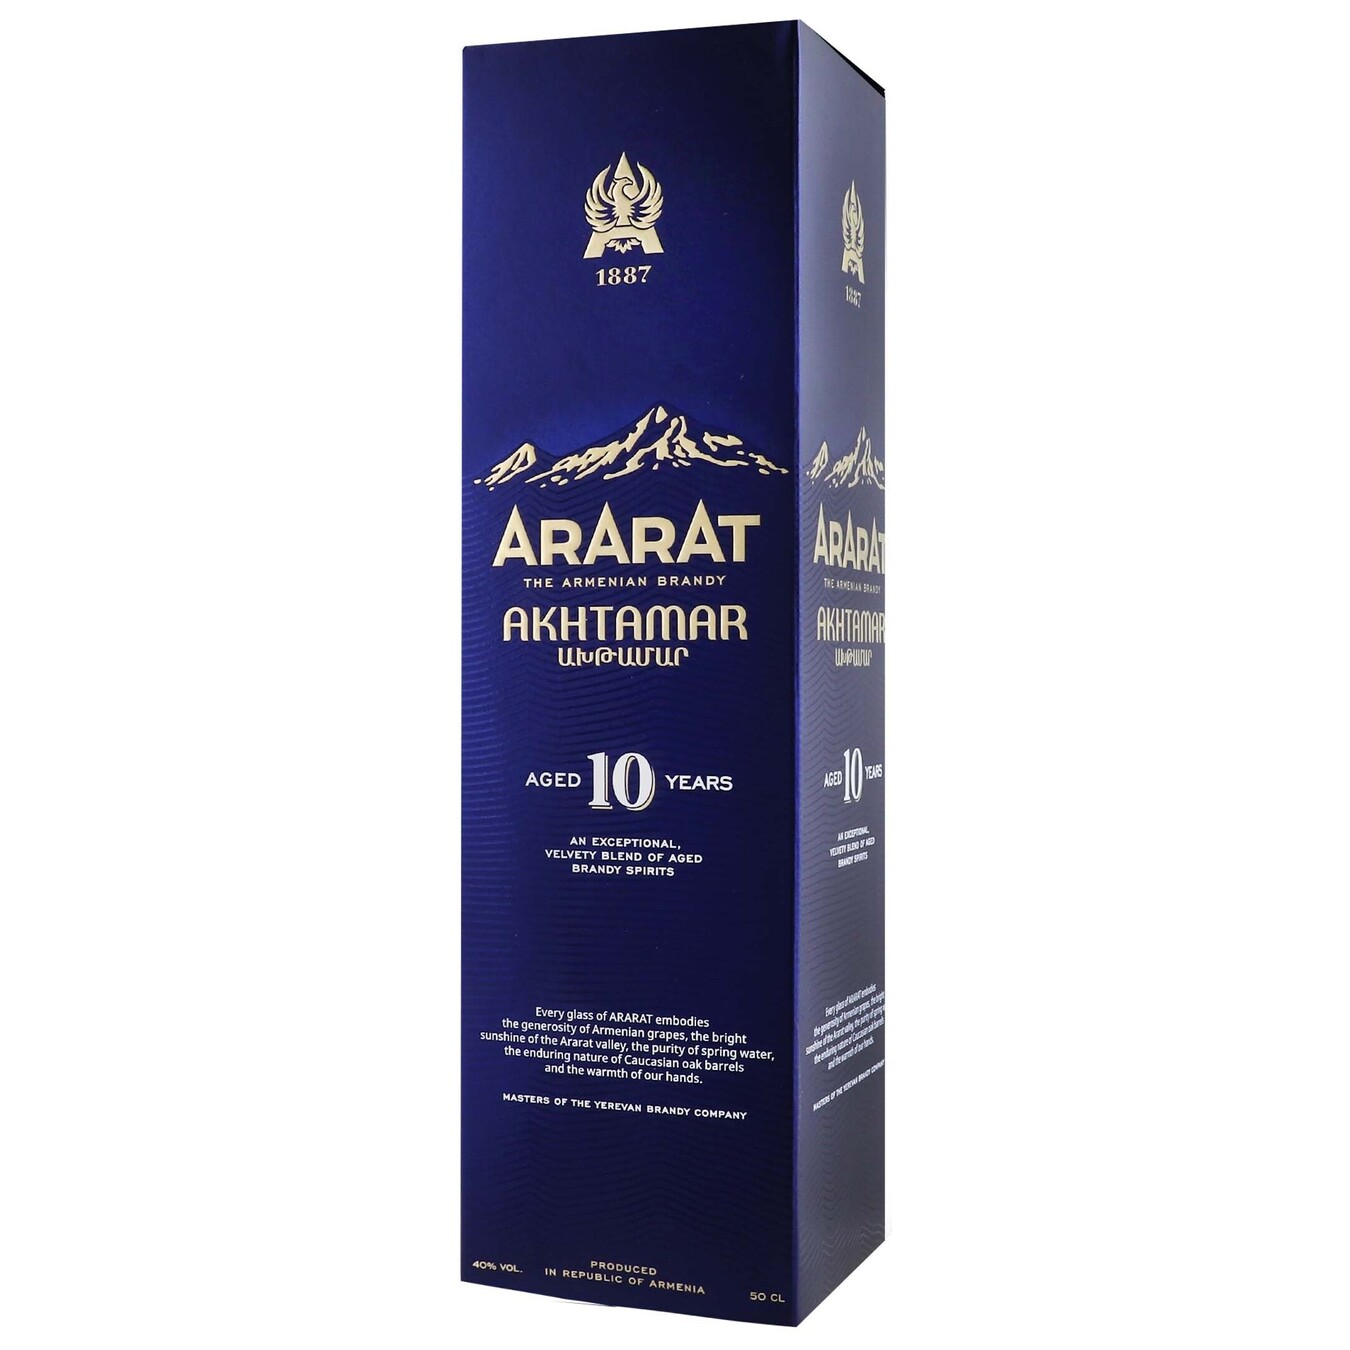 Cognac ArArAt Akhtamar 10 years IVF in a box 40% 0.5l 2